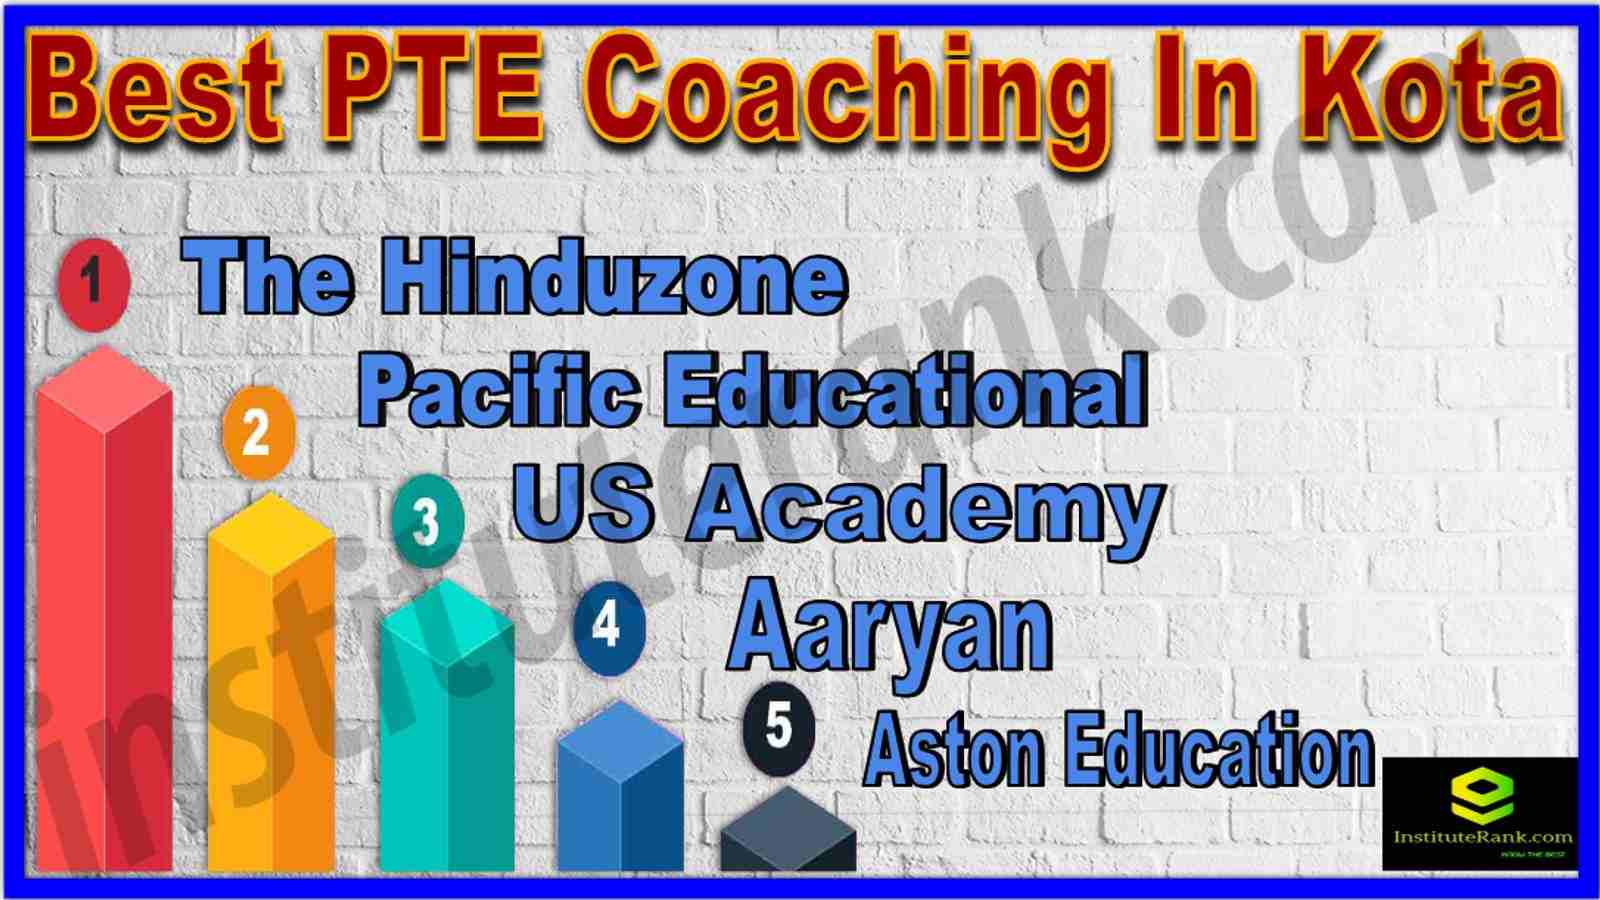 Best PTE Coaching In Kota